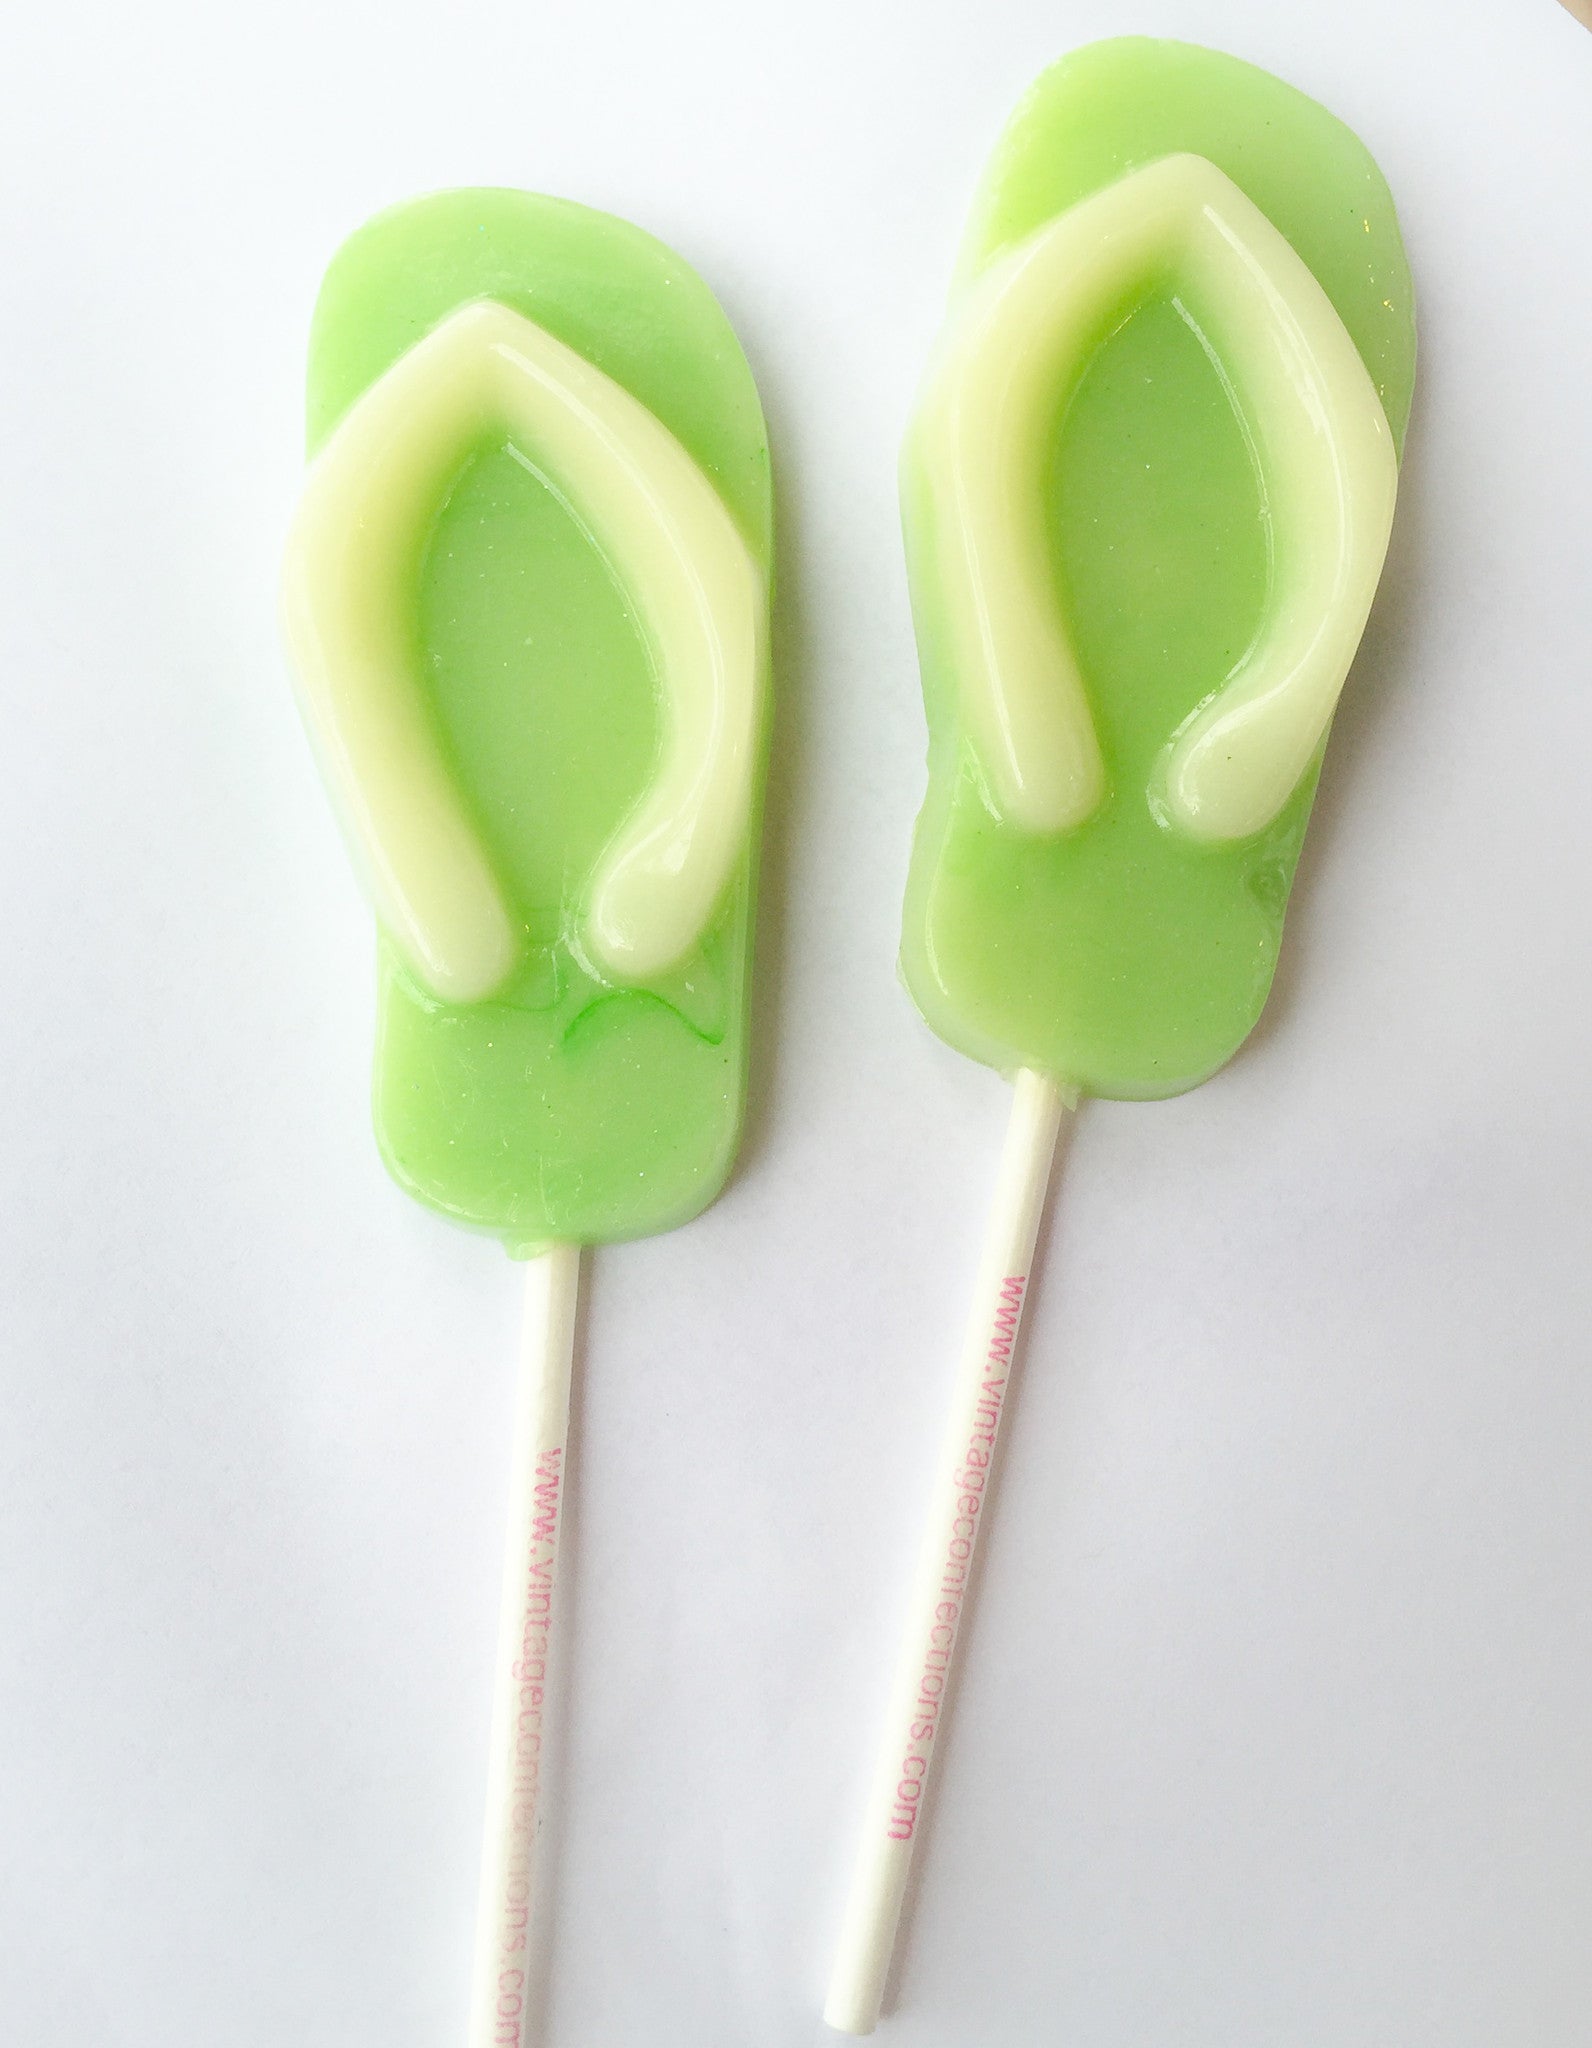 Flip Flop Shaped Lollipops 6-piece set by I Want Candy!